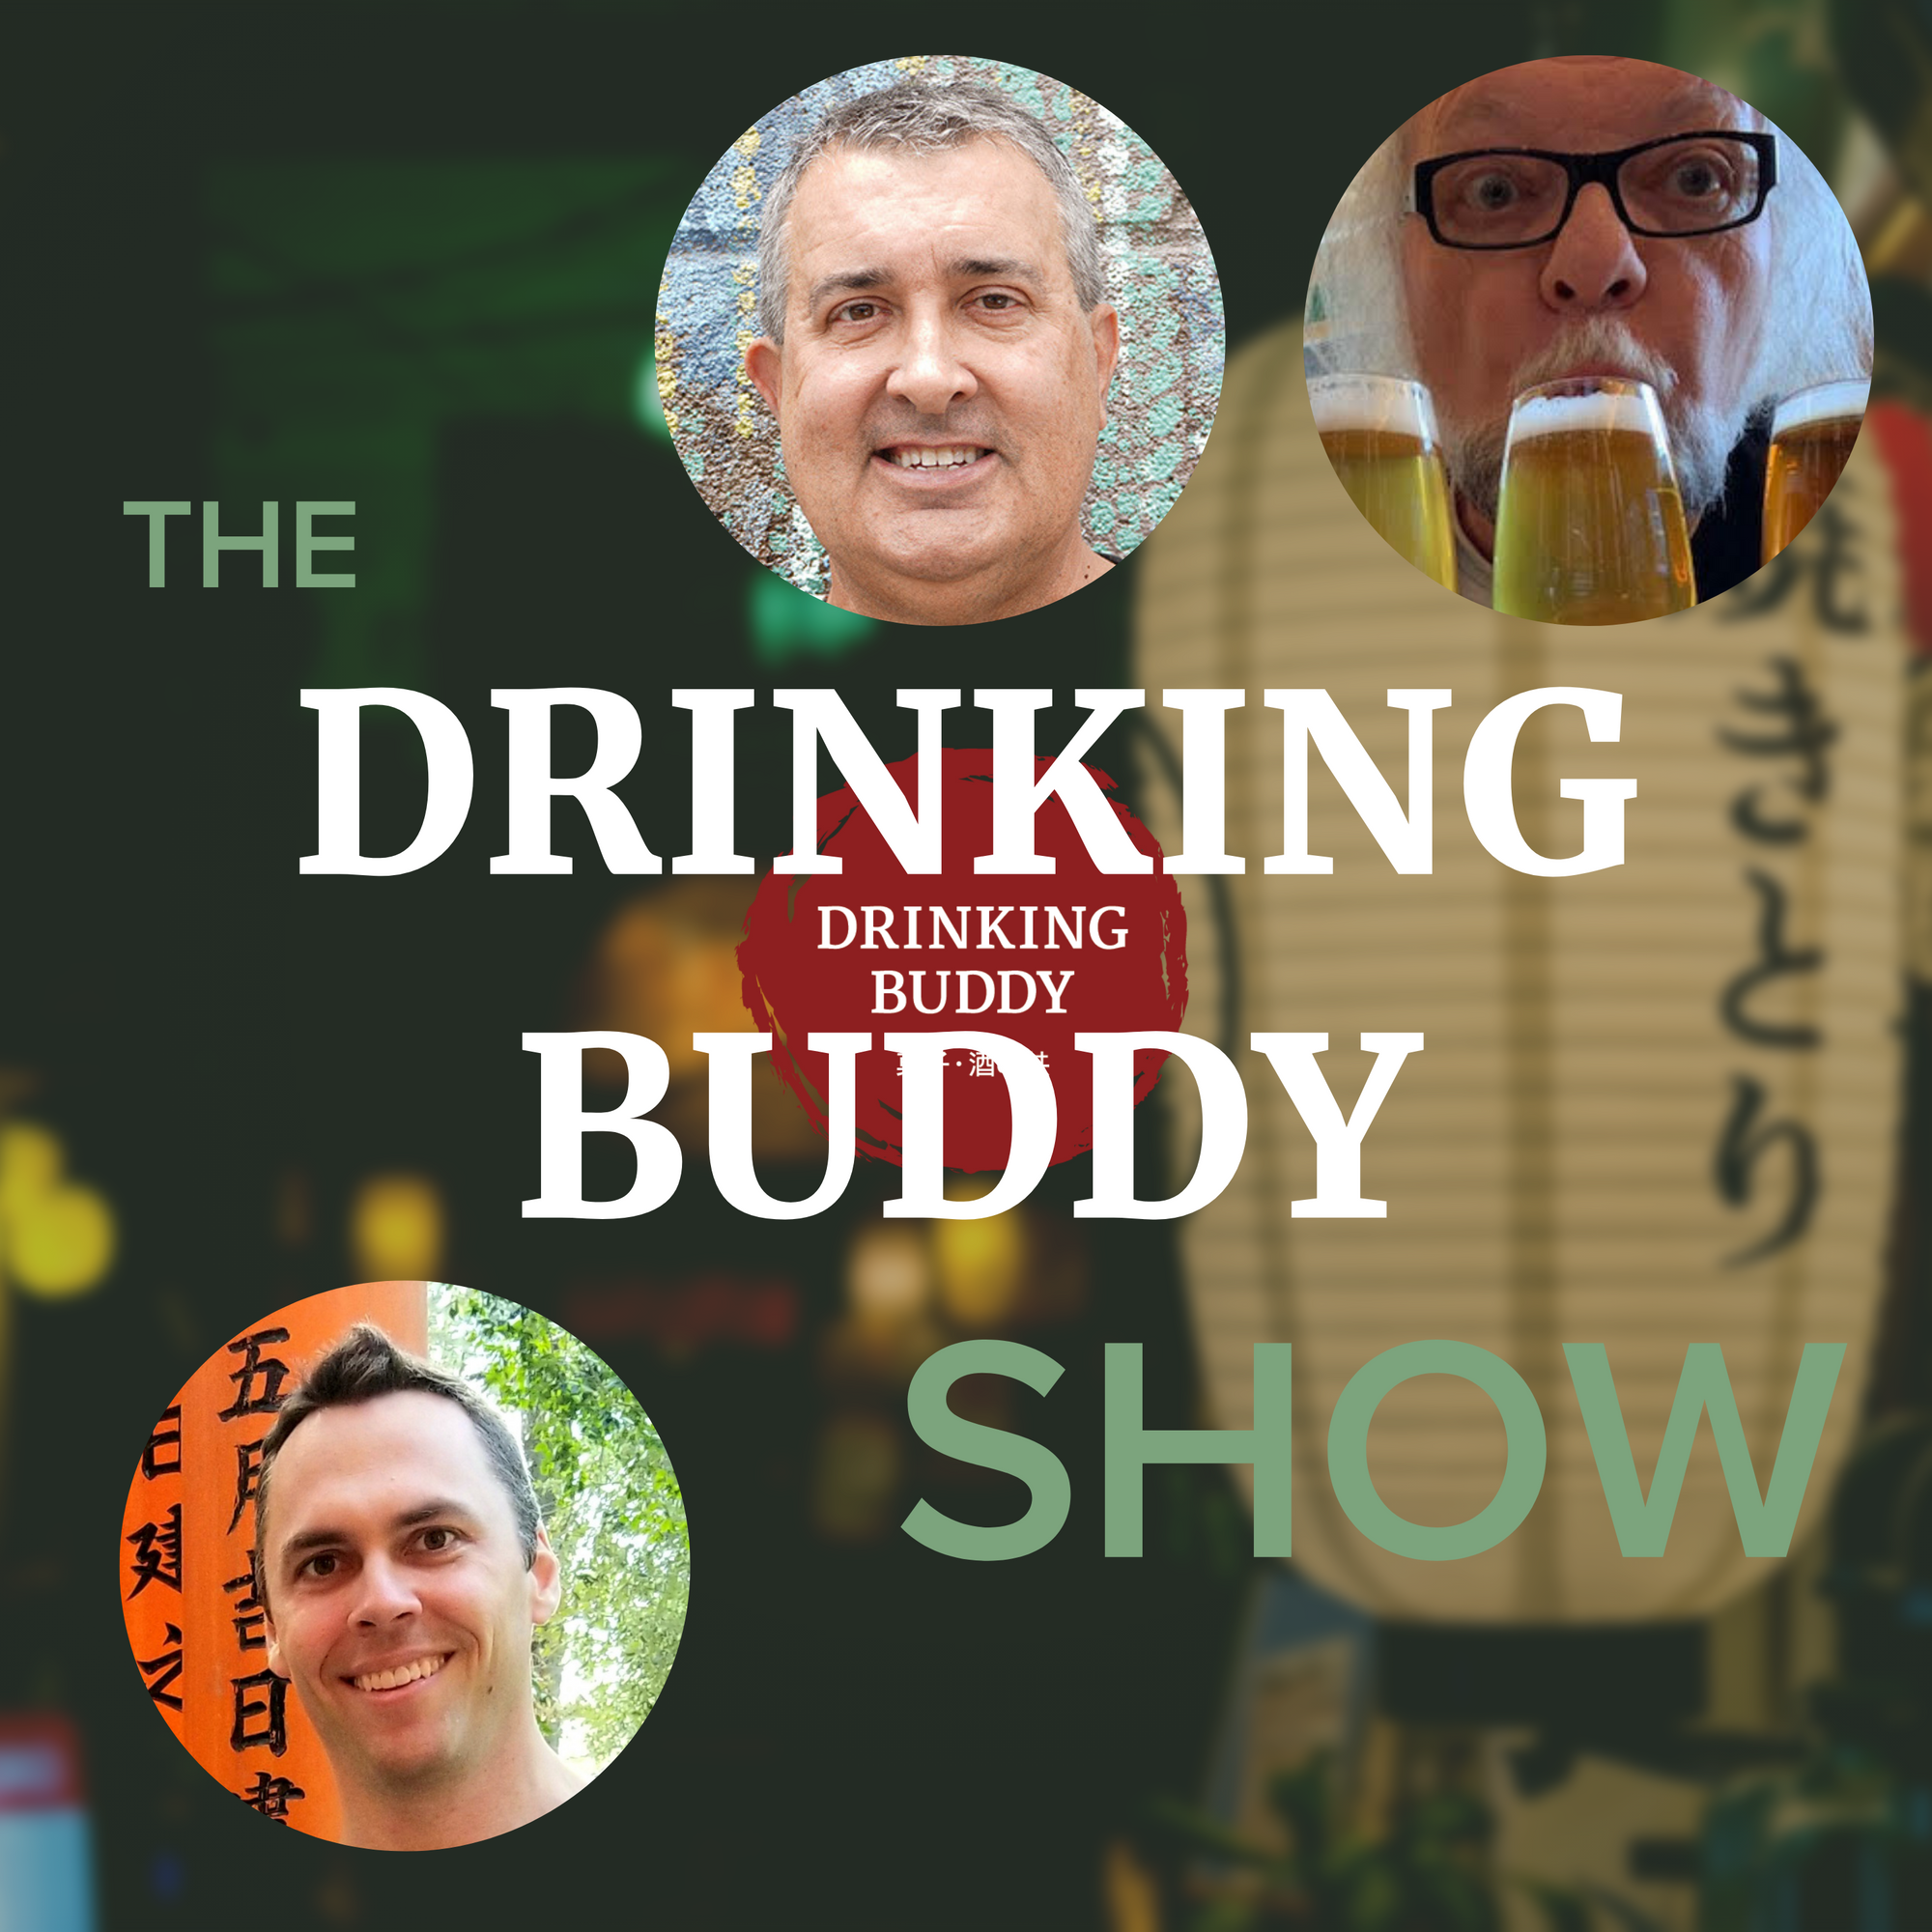 The Drinking Buddy Show Episode 11: Daniel Drennon & Tom Carroll of Beer Paper LA